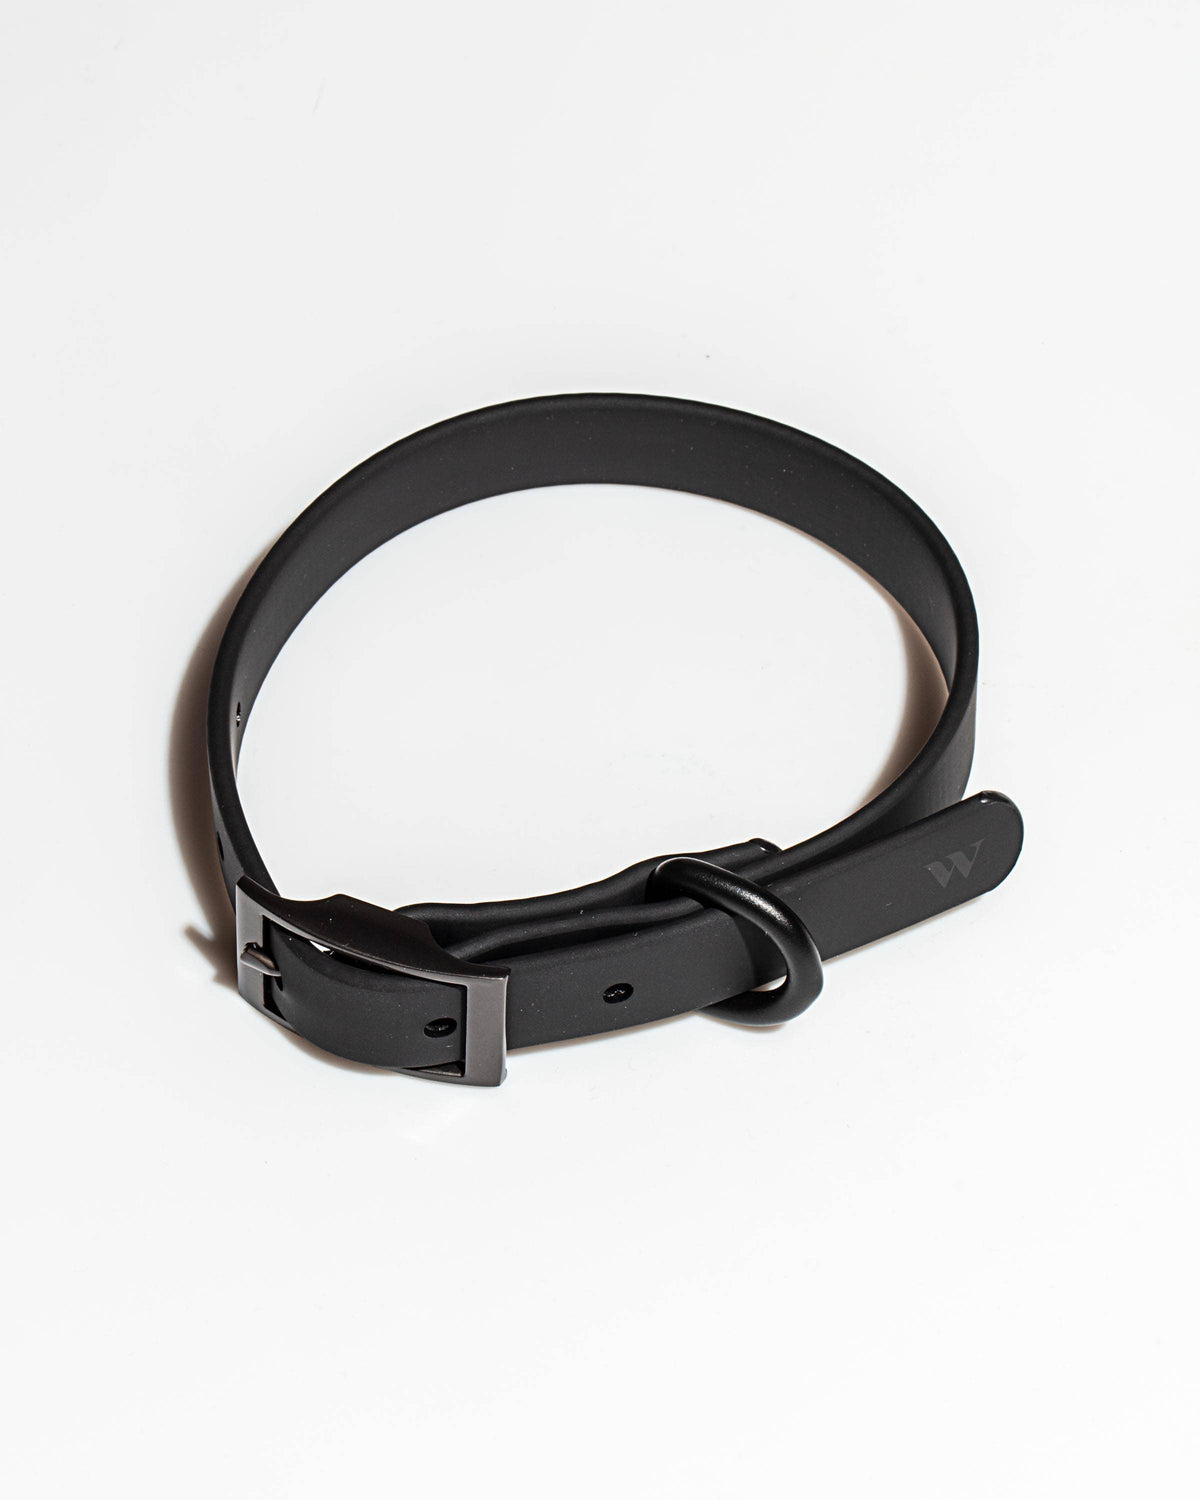 Adjustable Waterproof Fashion Dog Collar: X-SMALL / Blush